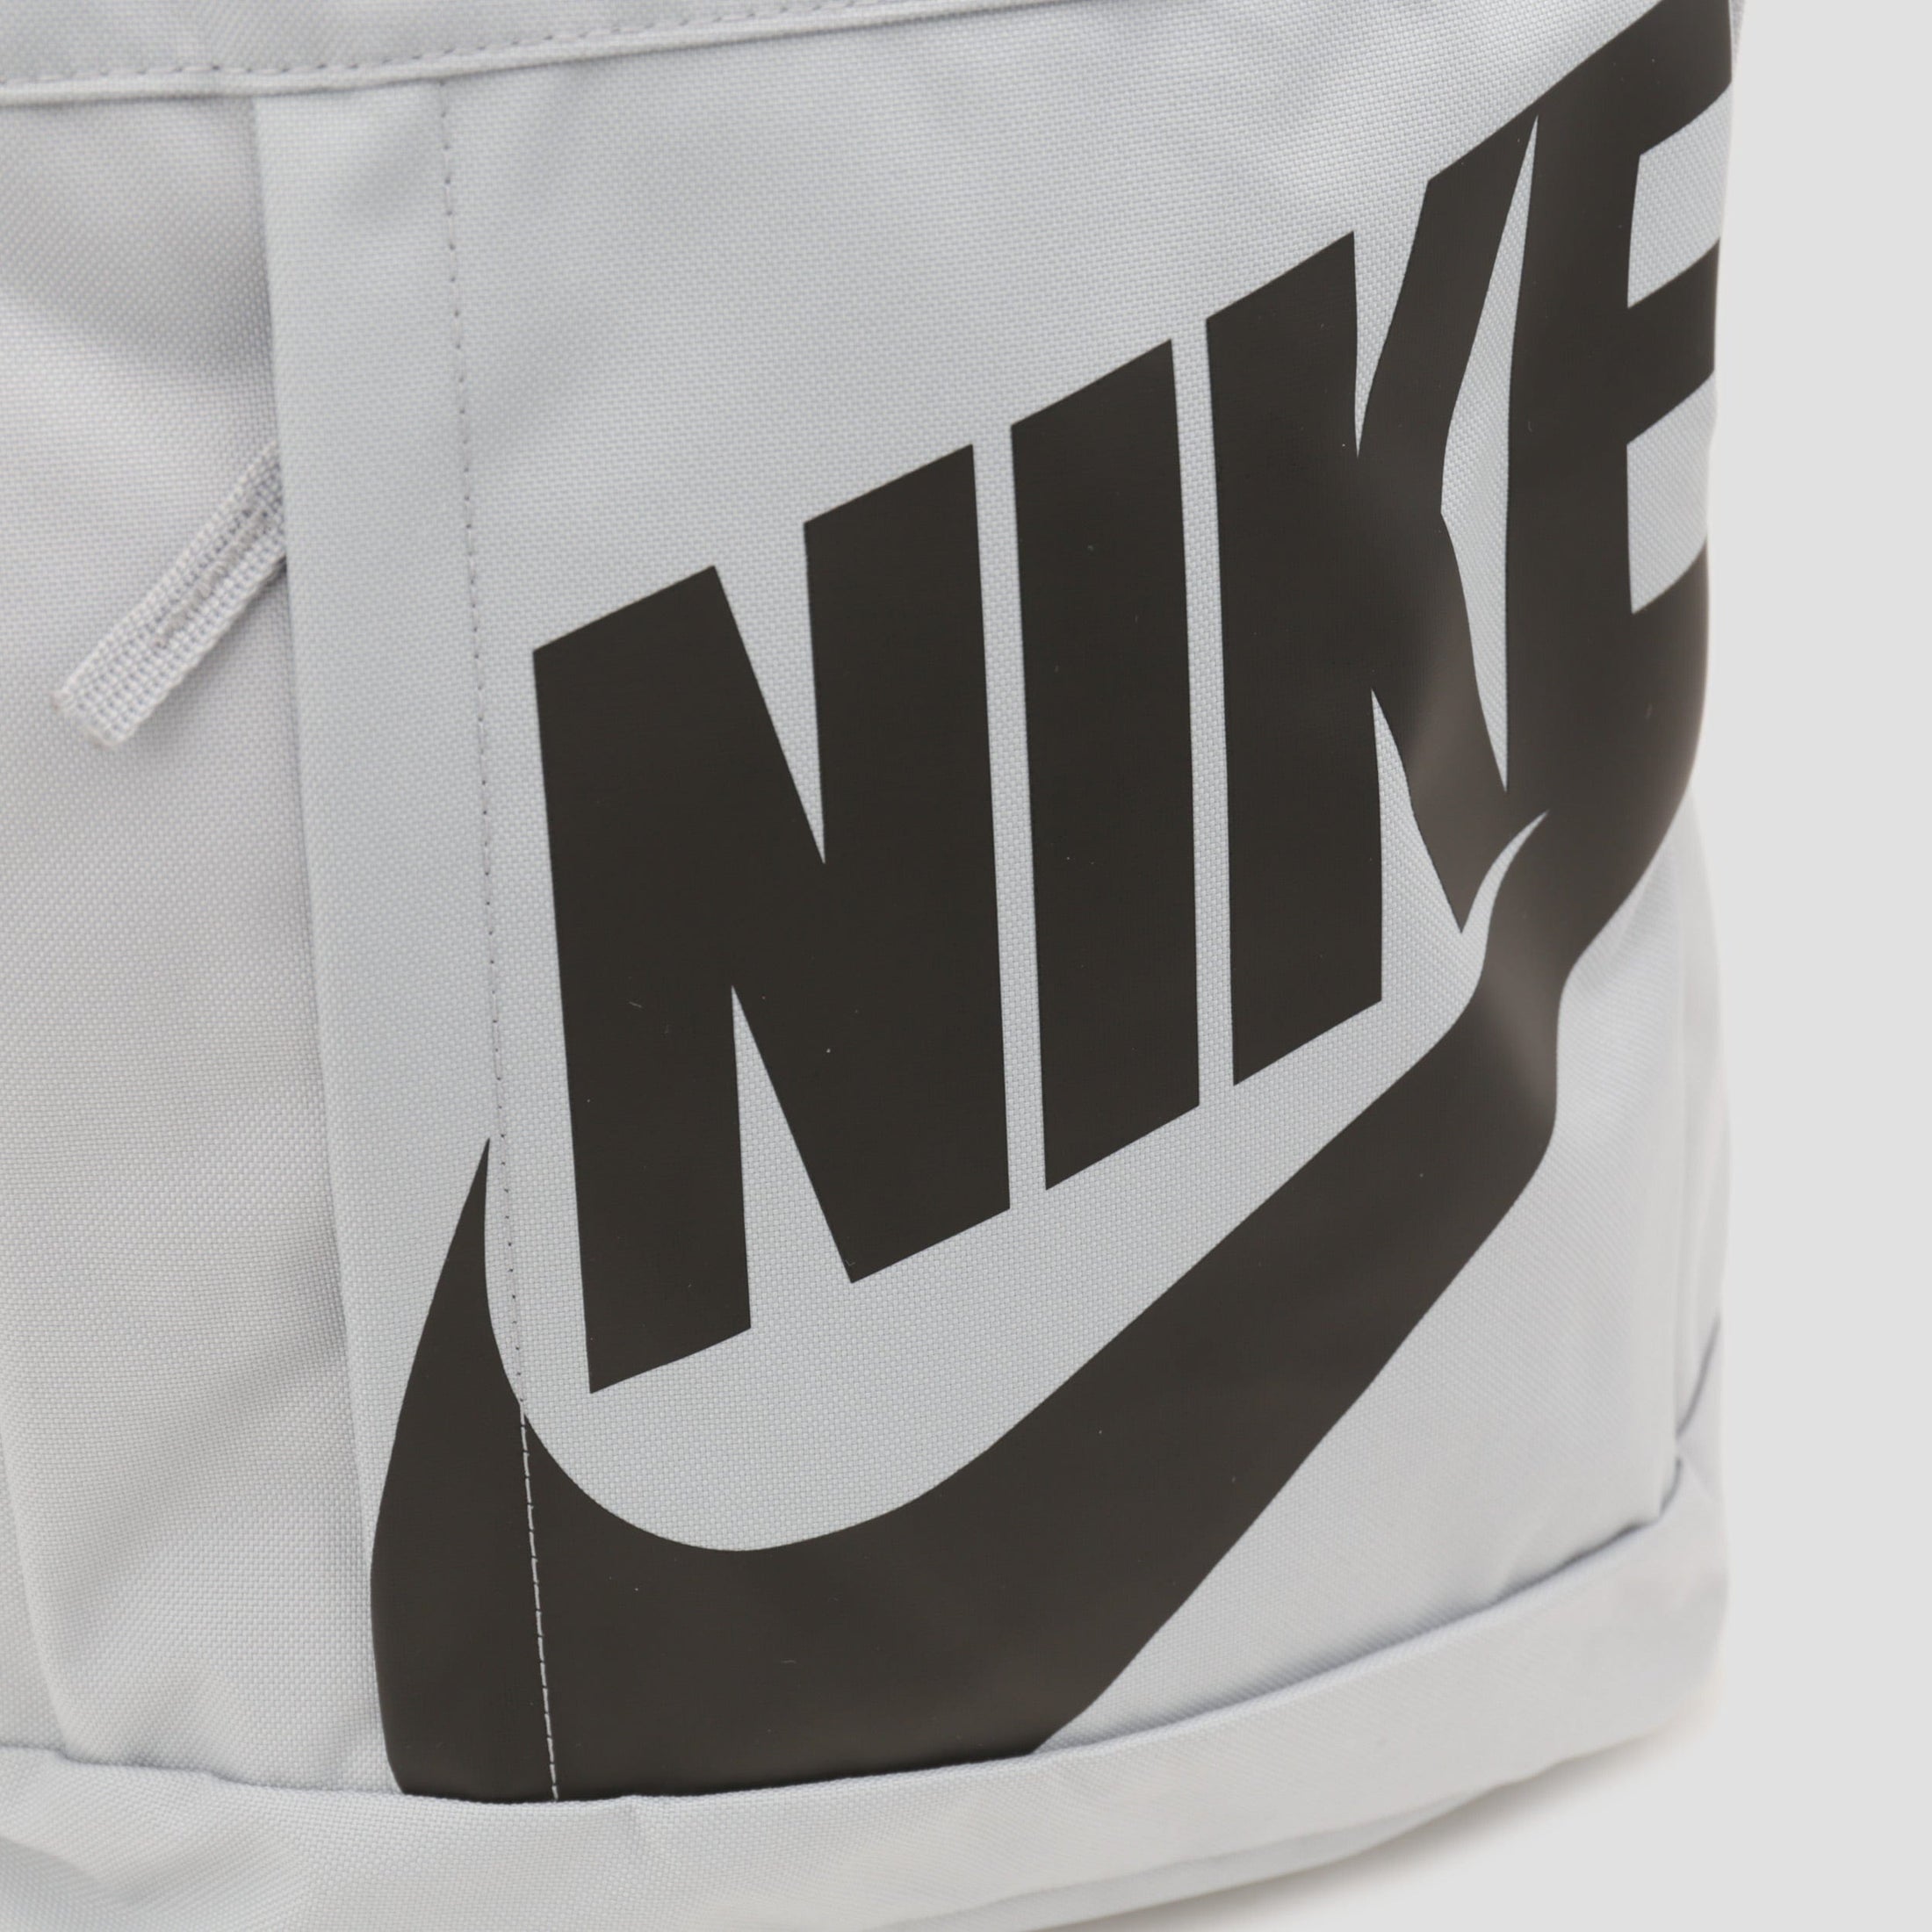 Nike Elemental Backpack Wolf Grey / Black